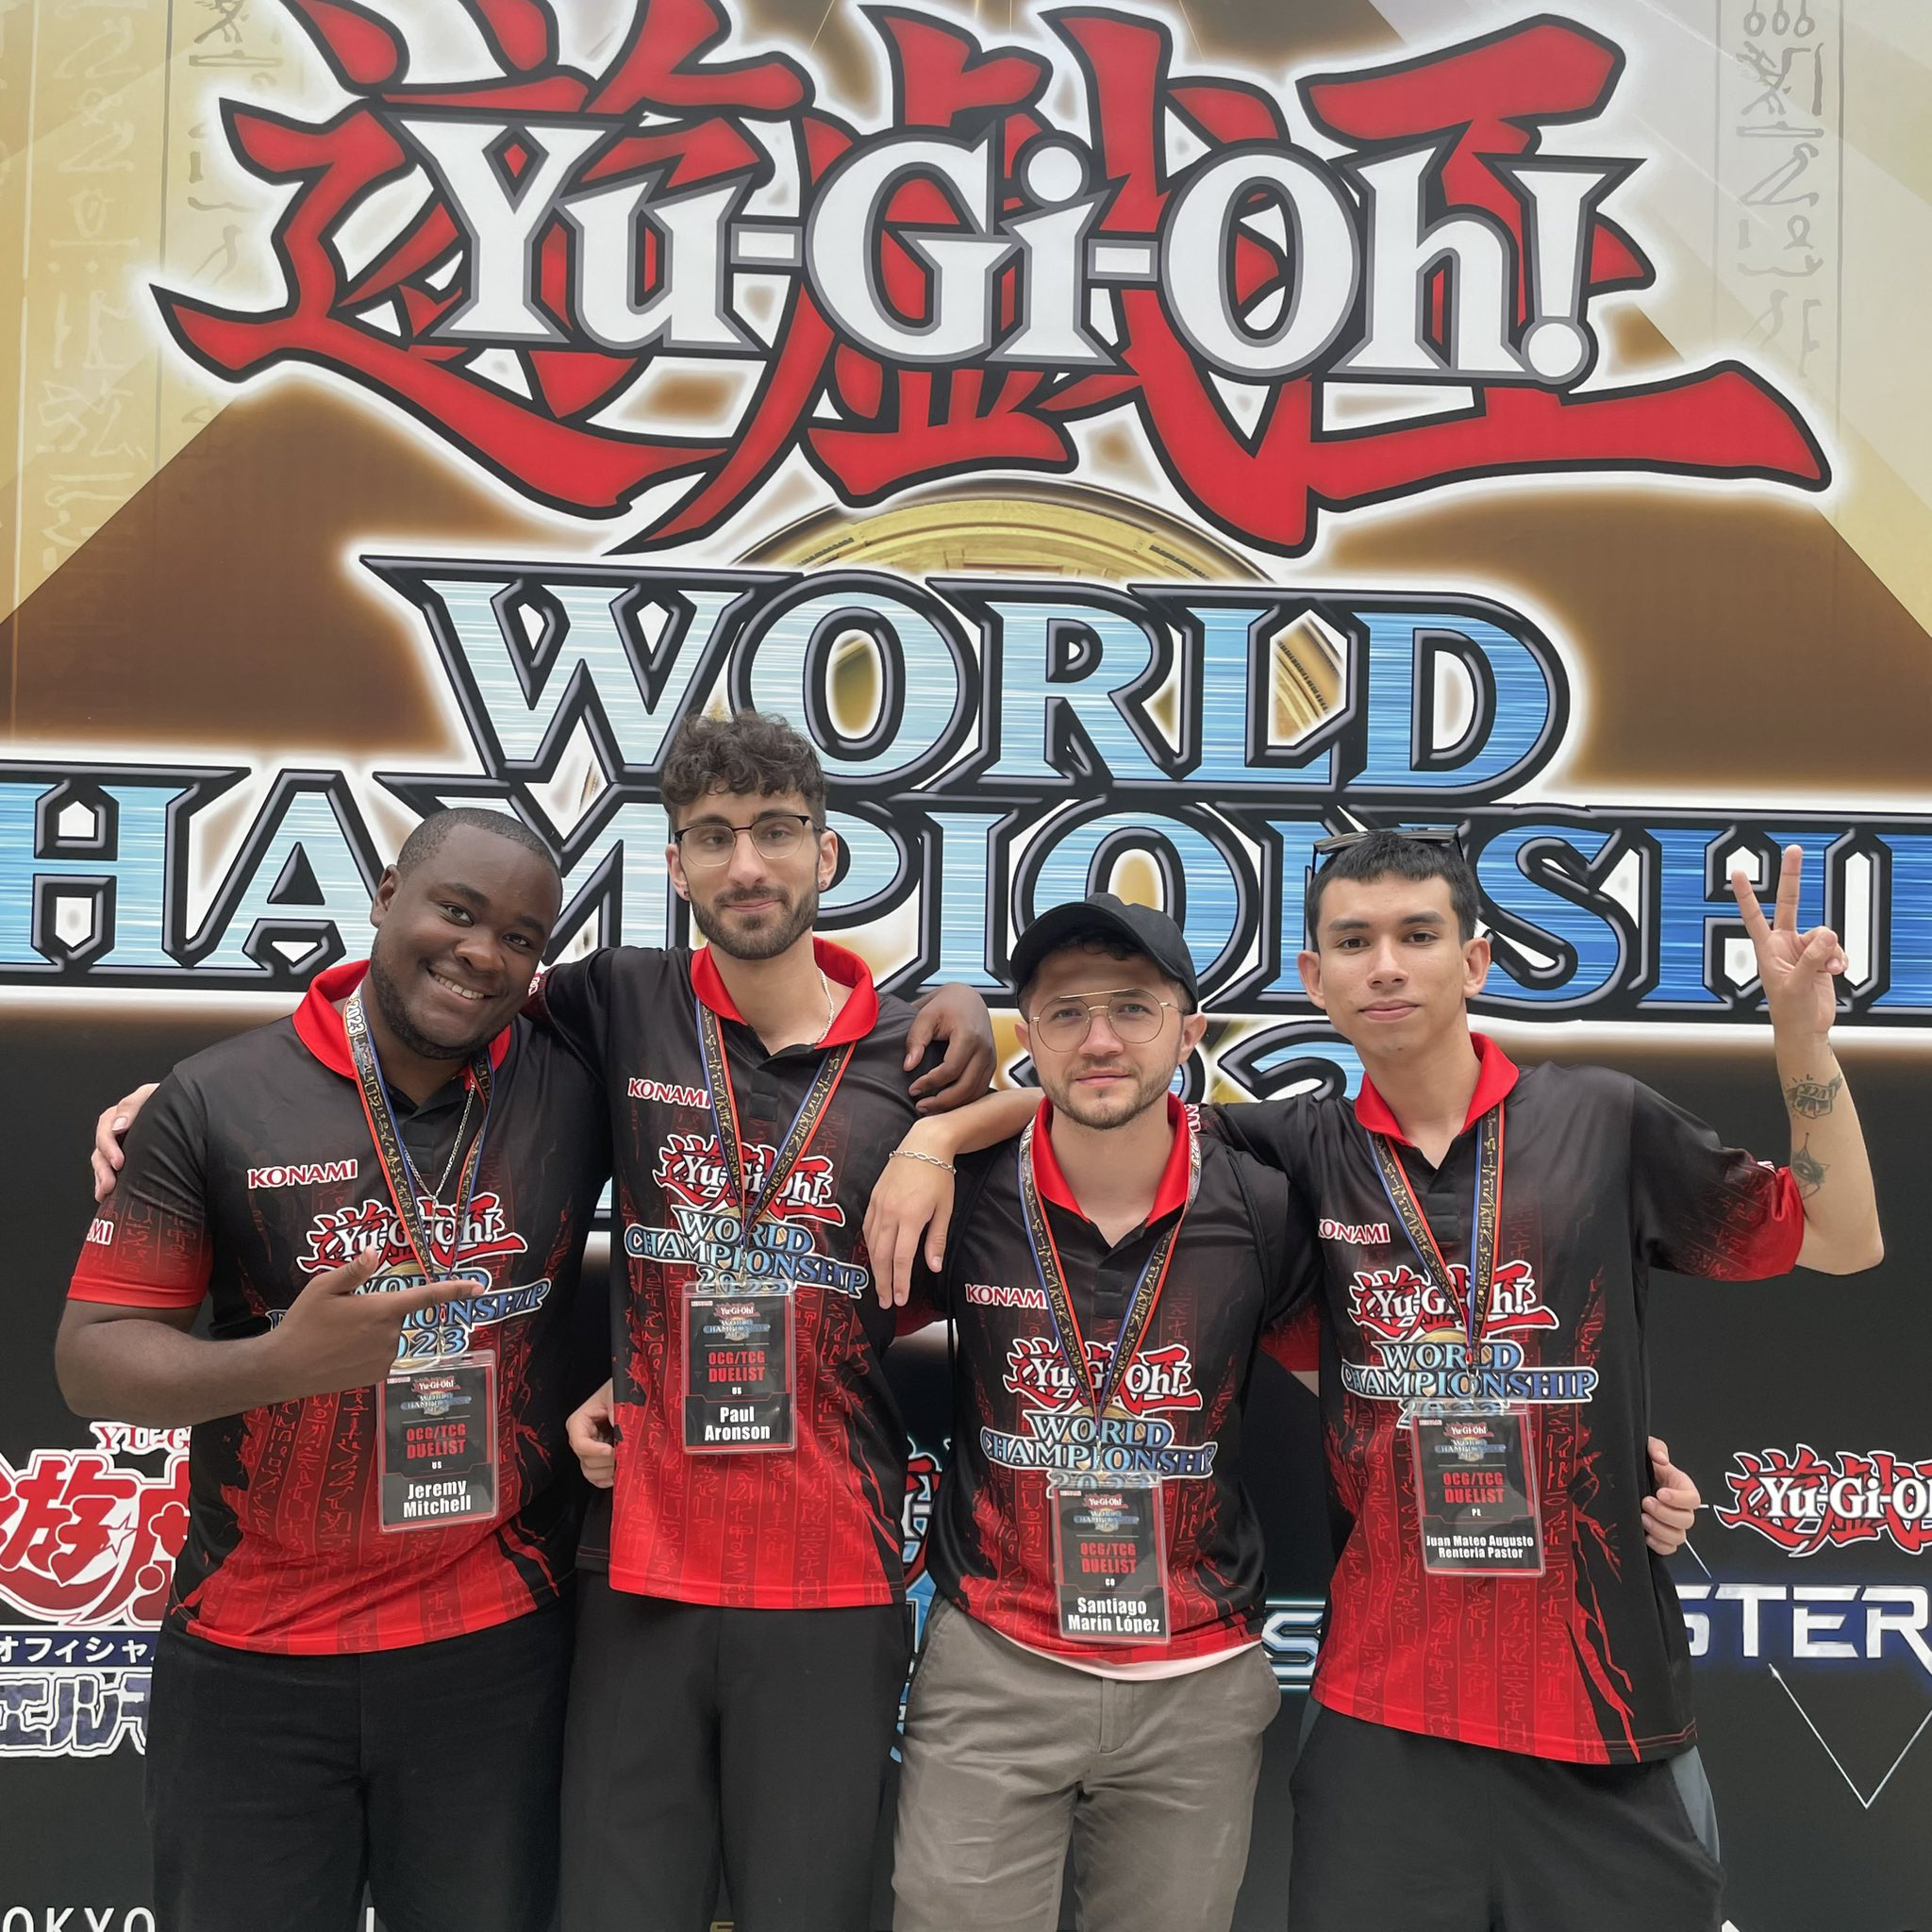 Yu-Gi-Oh! World Championship 2023 (WCS2023)